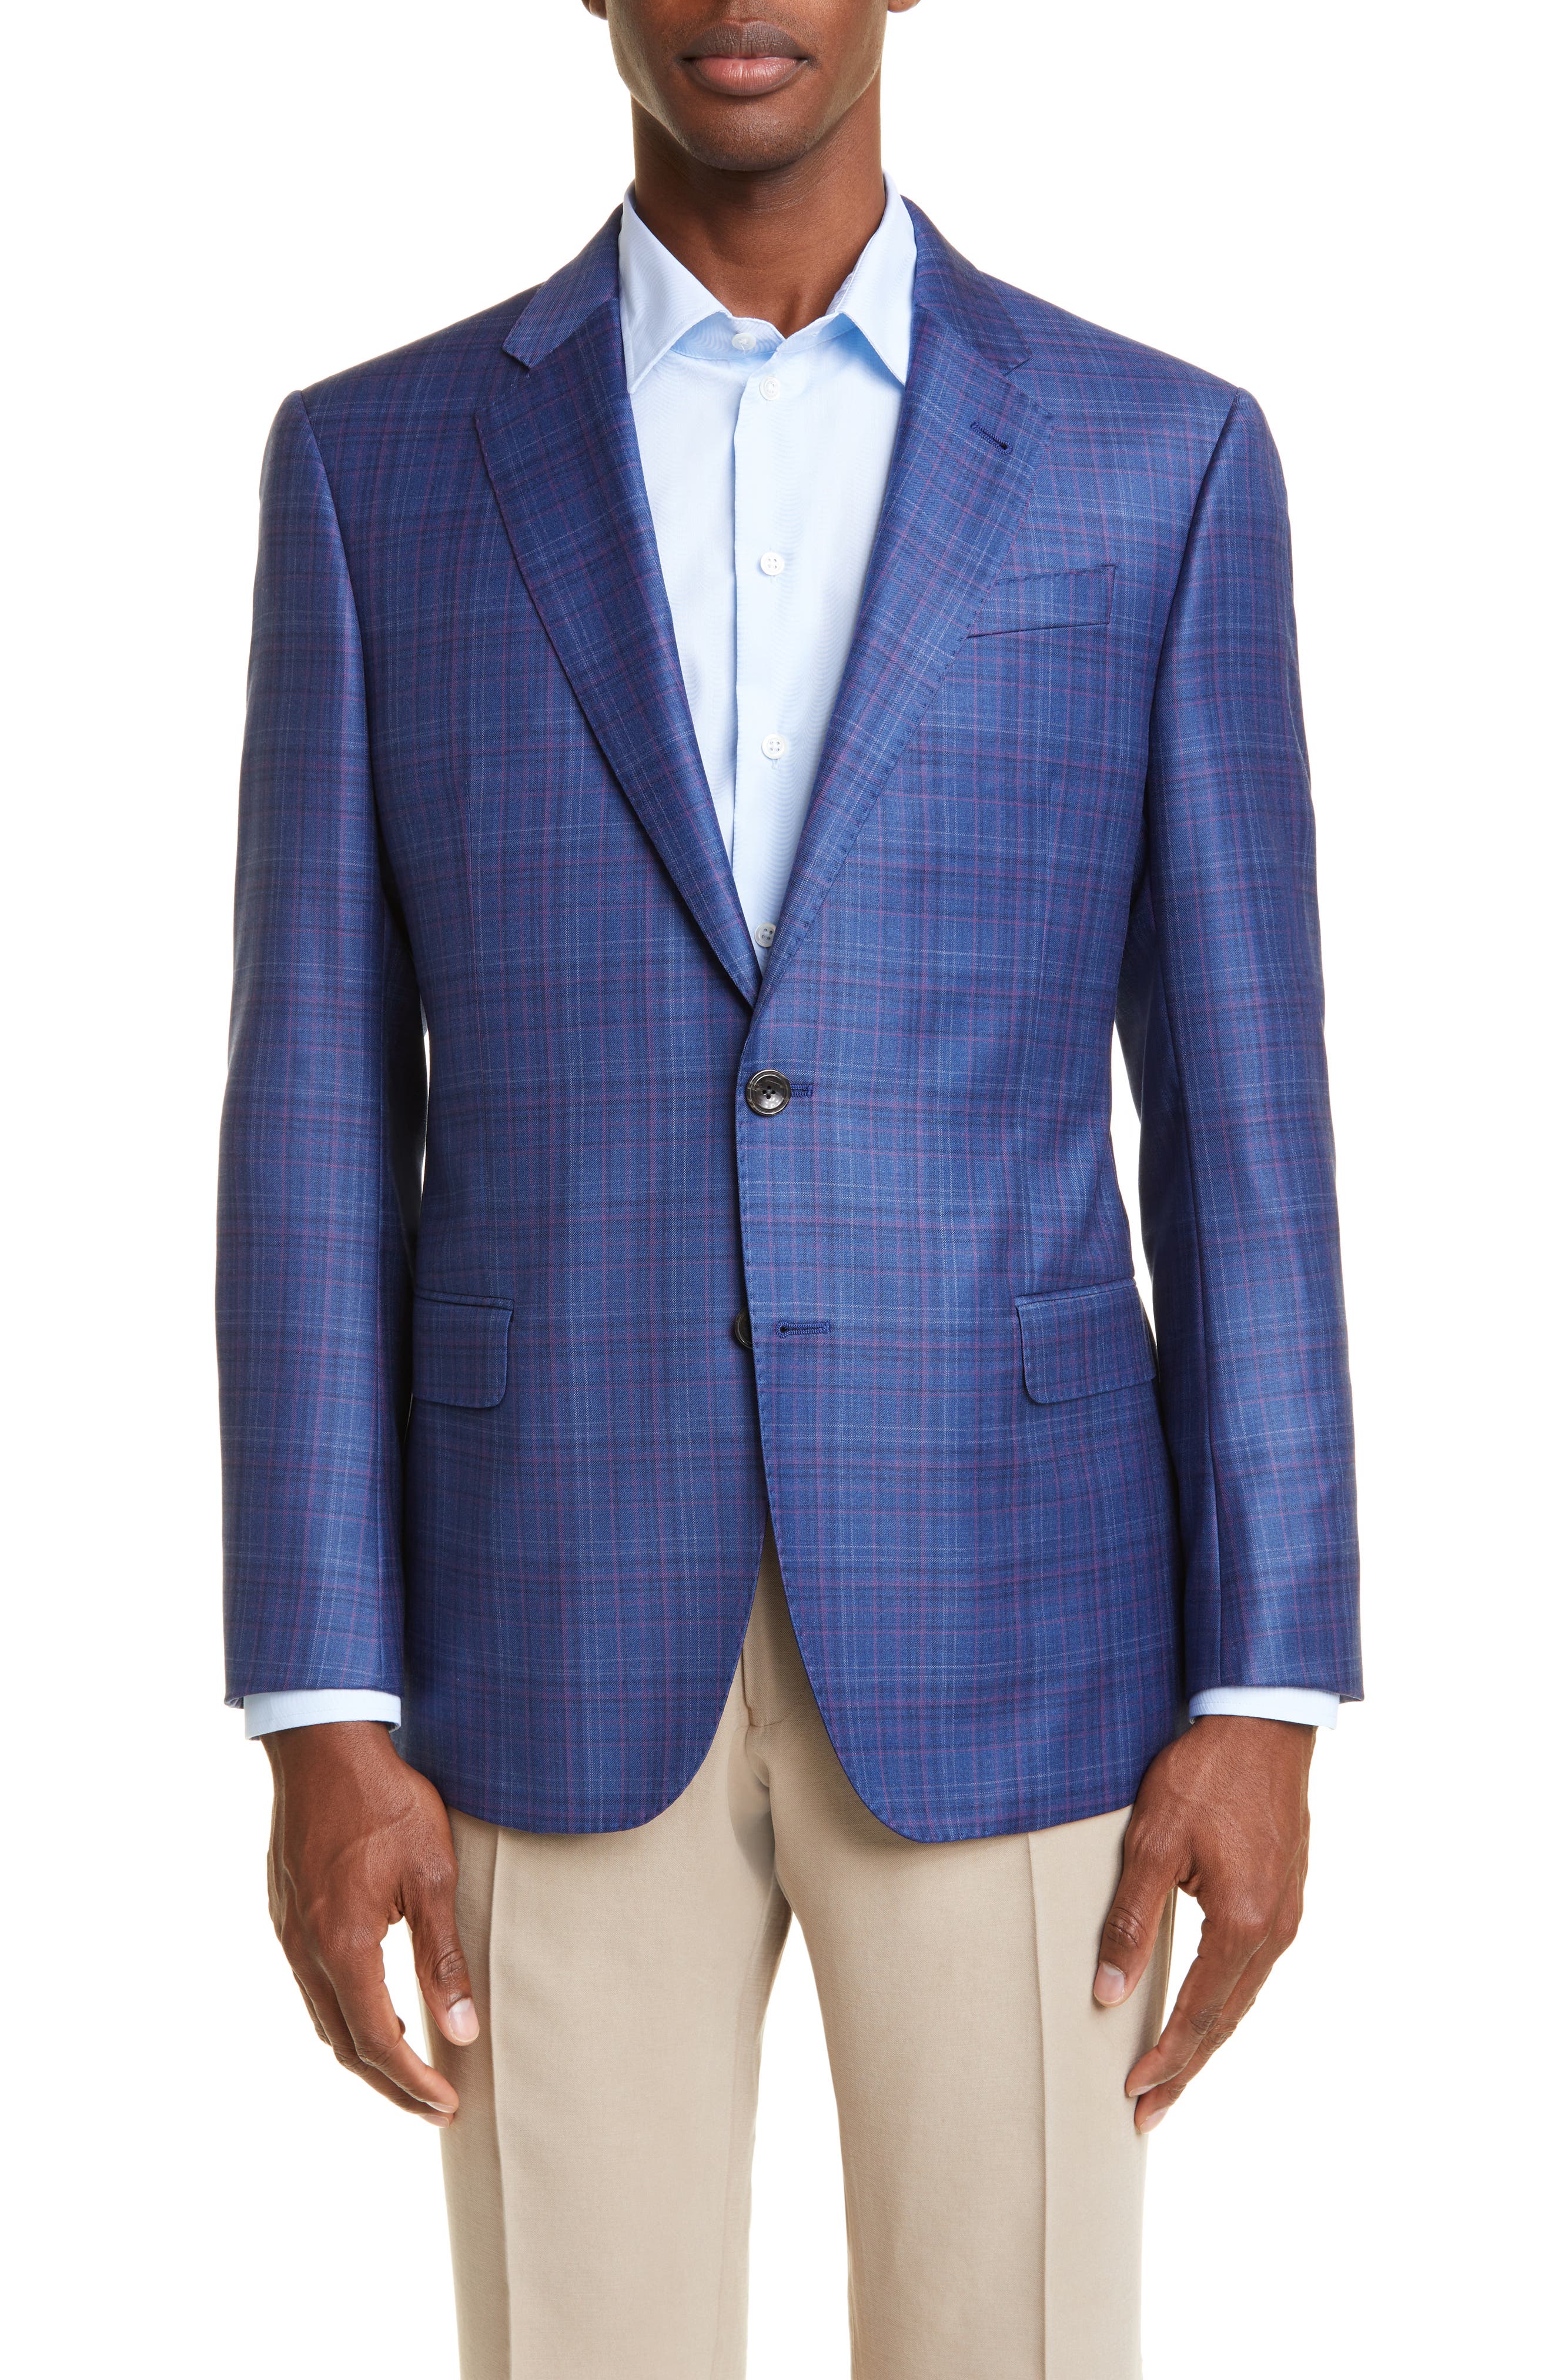 Emporio Armani Men's Multicolor Windowpane Wool Sport Coat in Solid Medium Blue